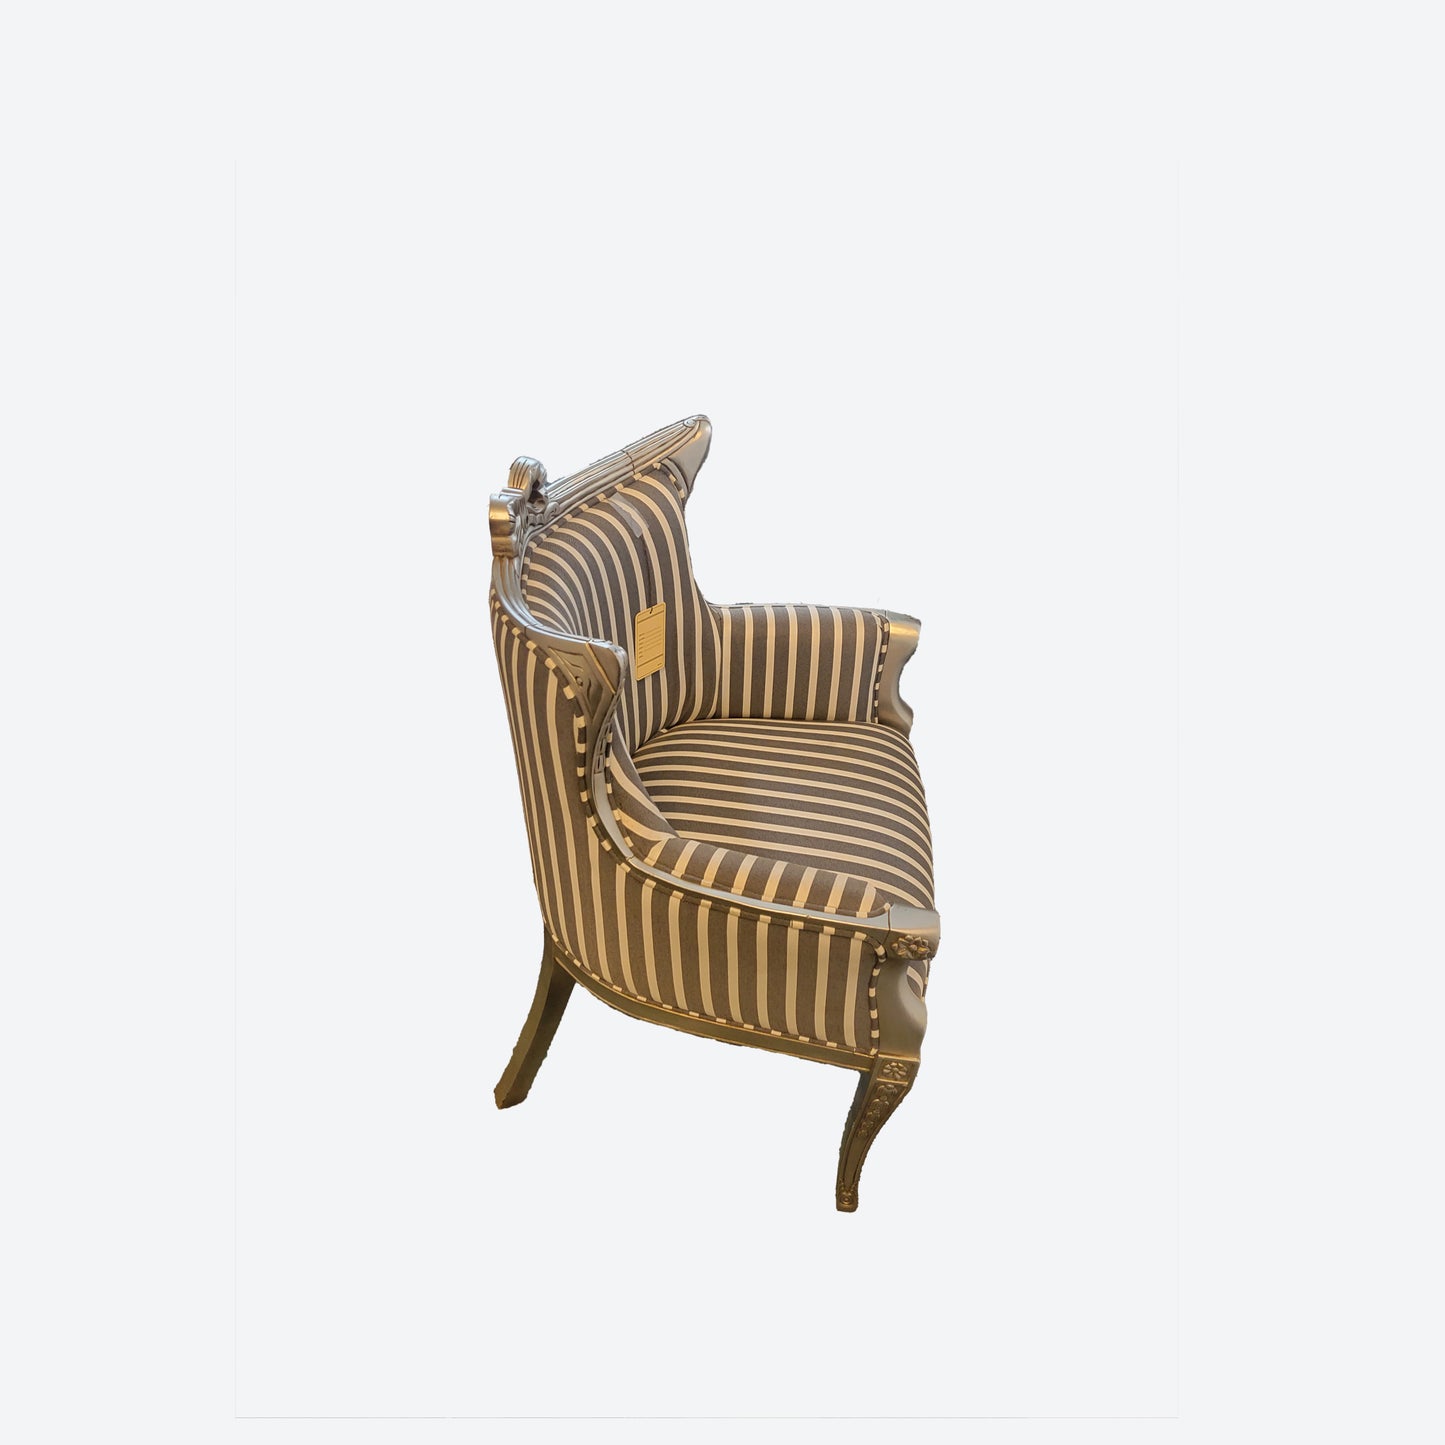 Cedar Wood Bowtie Chair With Silver Trim And Stripped Organic Canvas Fabric -SK- SKU 1093